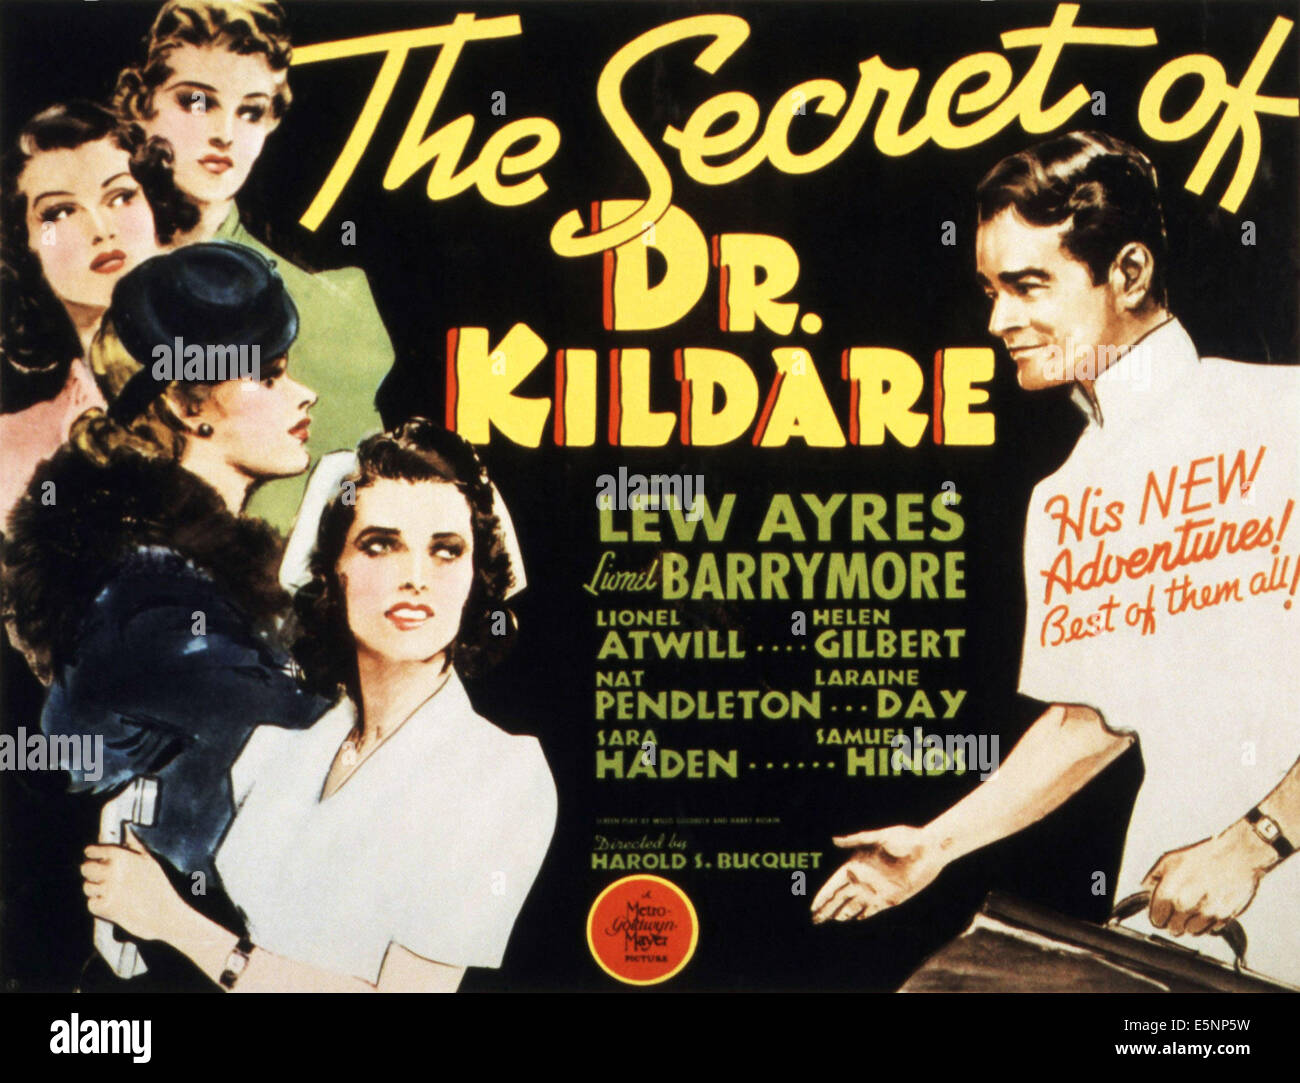 THE SECRET OF DR. KILDARE, Lew Ayres, 1939 Stock Photo